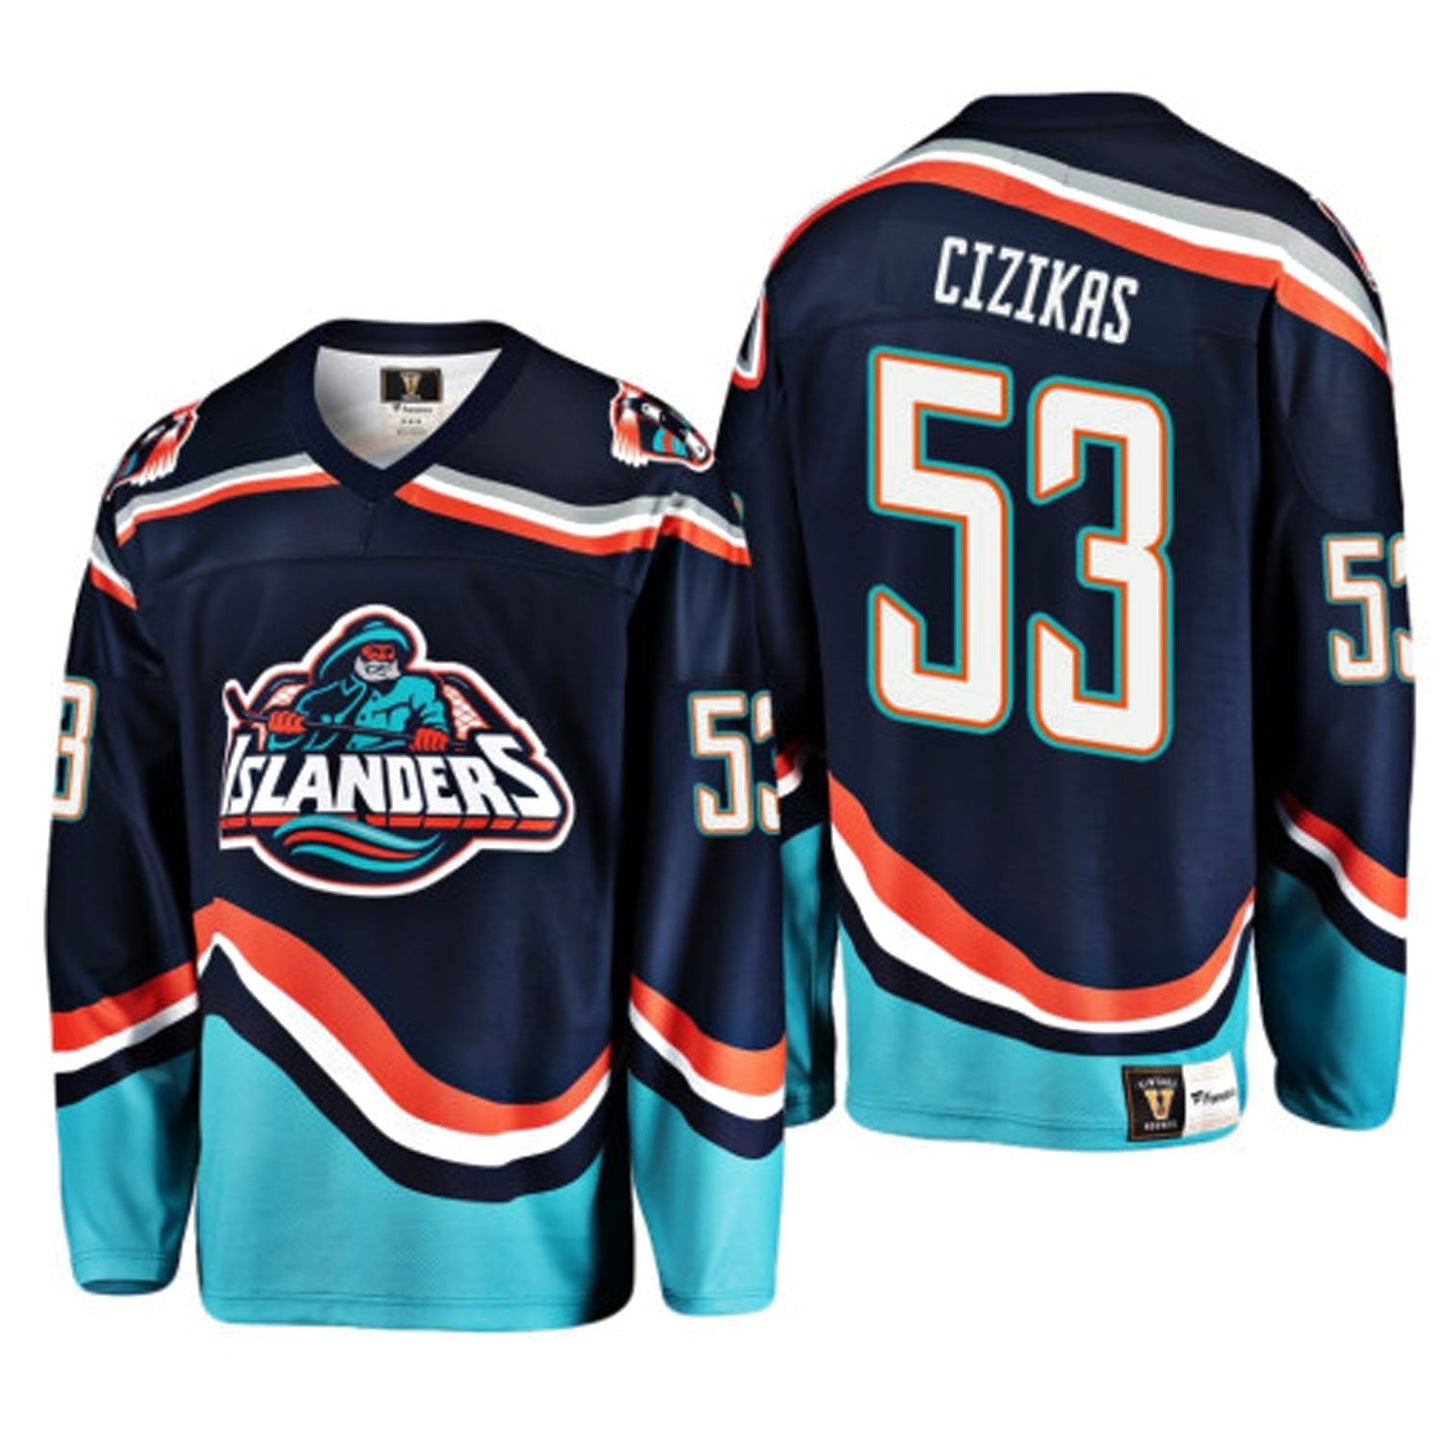 NHL Casey Cizikas New York Islanders 53 Jersey